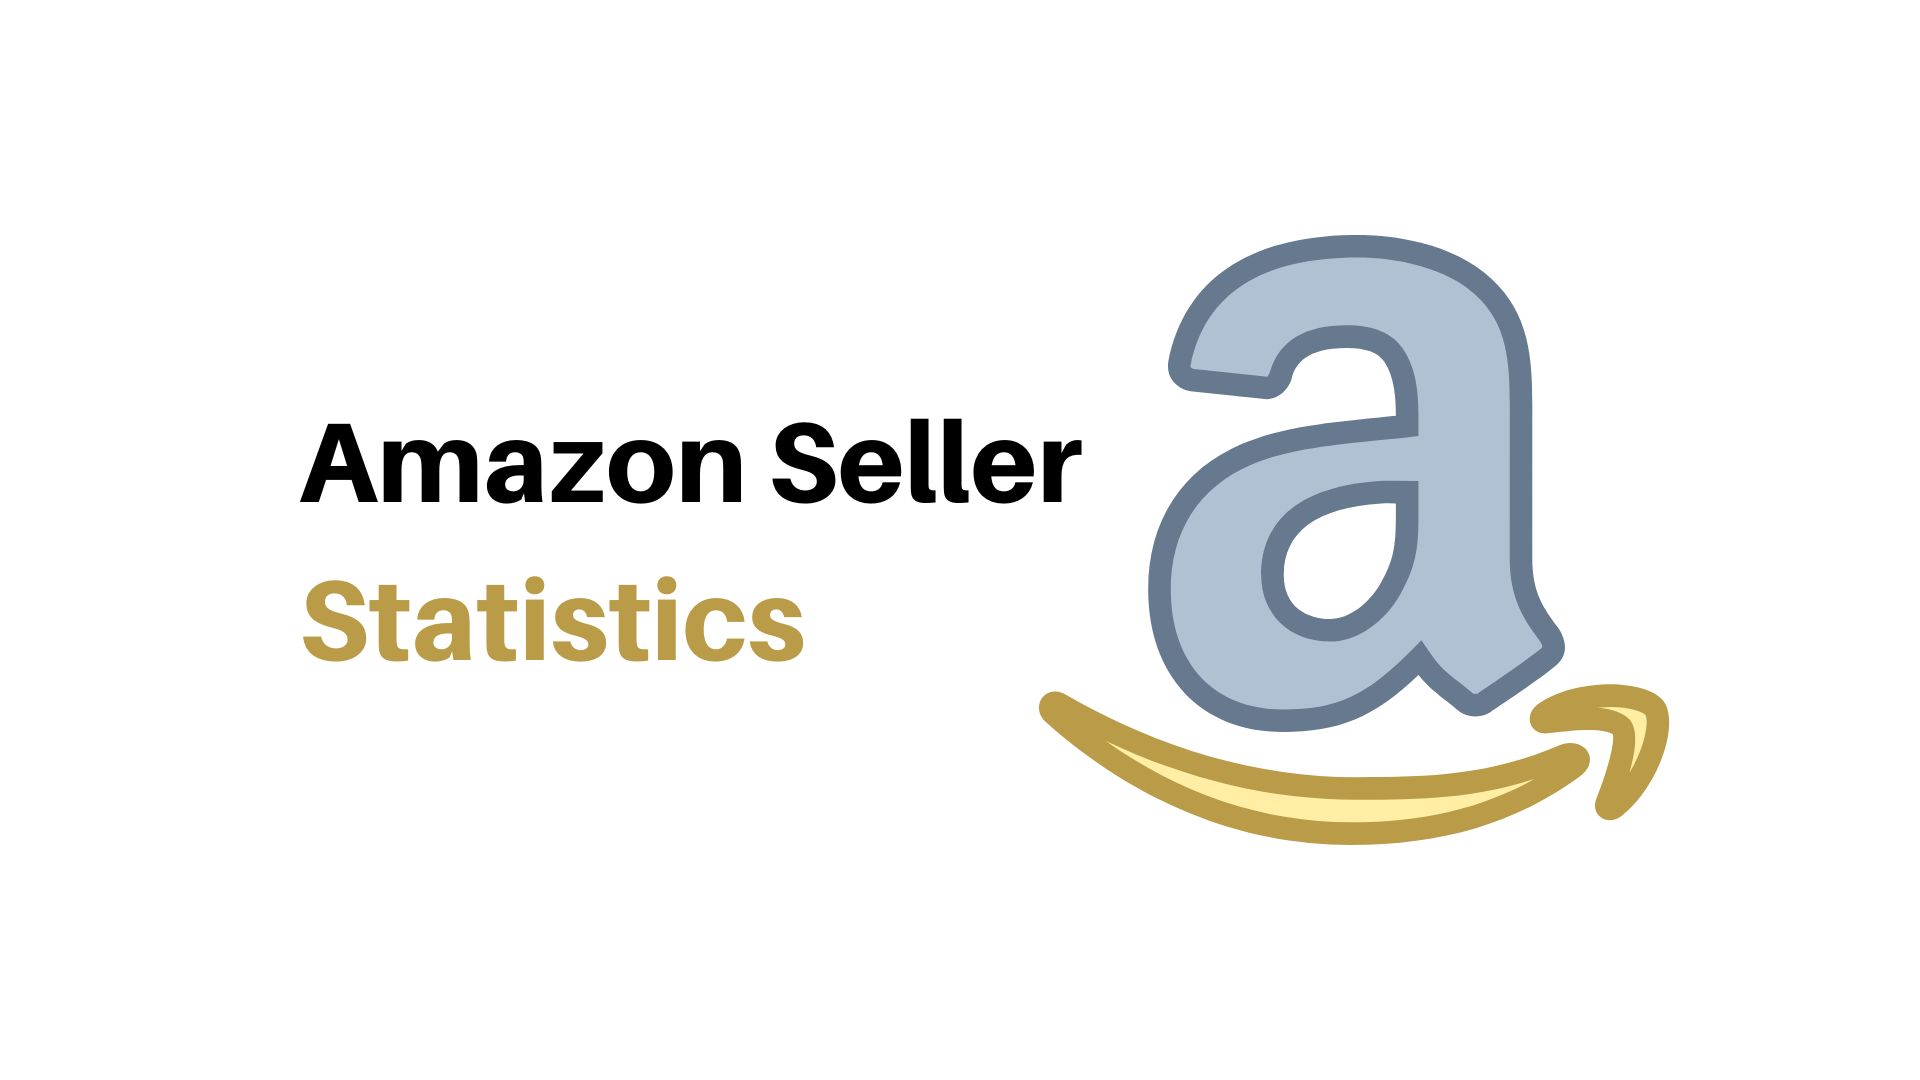 Amazon Seller Statistics 2024 By SMBs vs Enterprise, Device Traffic, Social Media Advertising, Concerns And Alternate Platforms